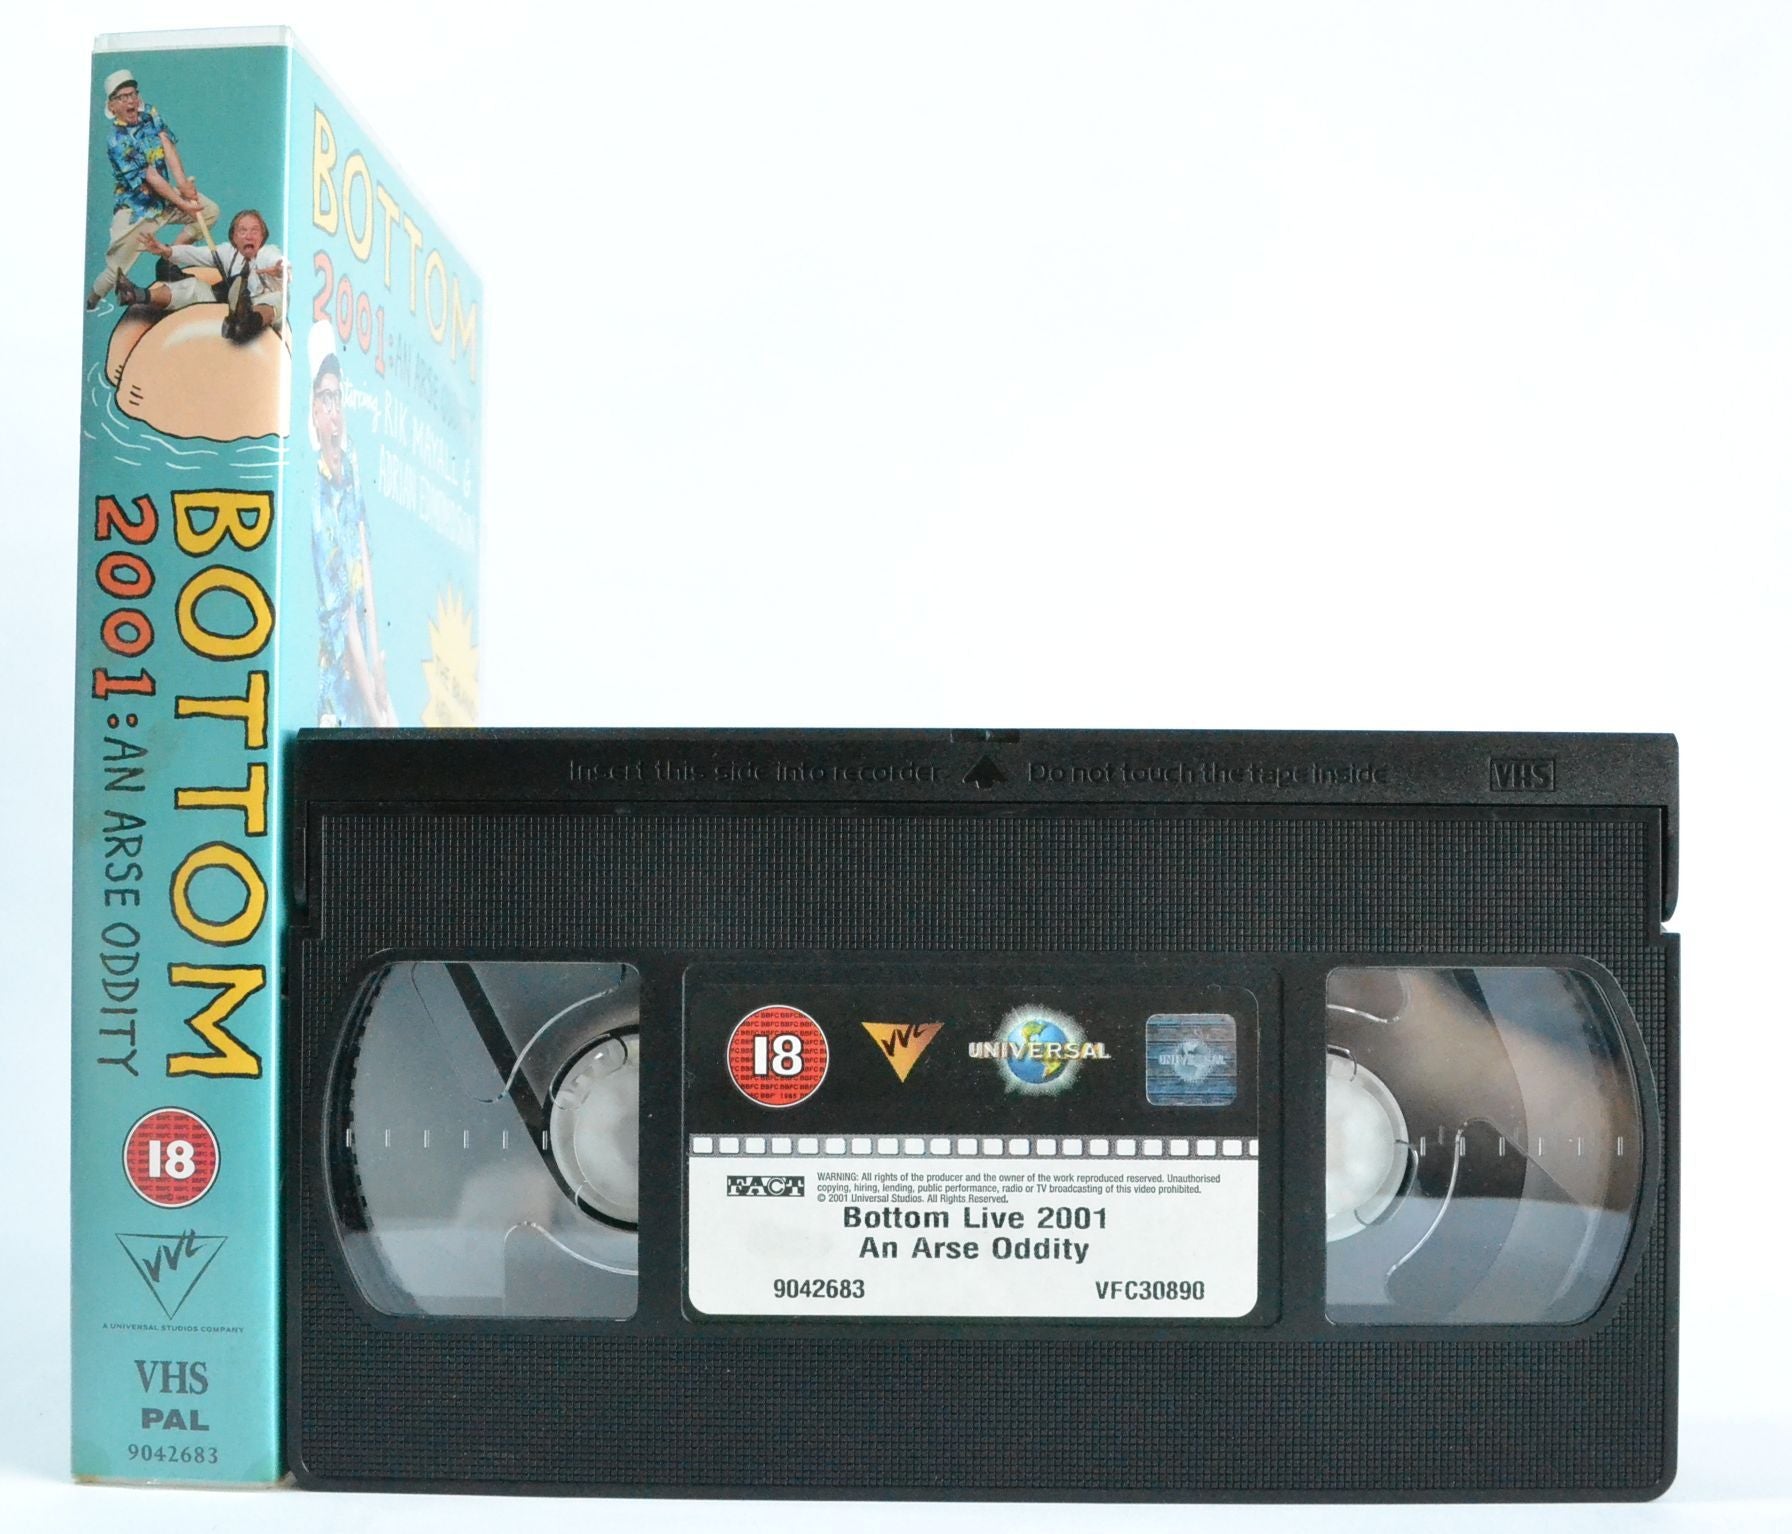 Bottom 2001: An Arse Oddity; Rik Mayall - 2001 Live Show - Slapstick Comedy - VHS-